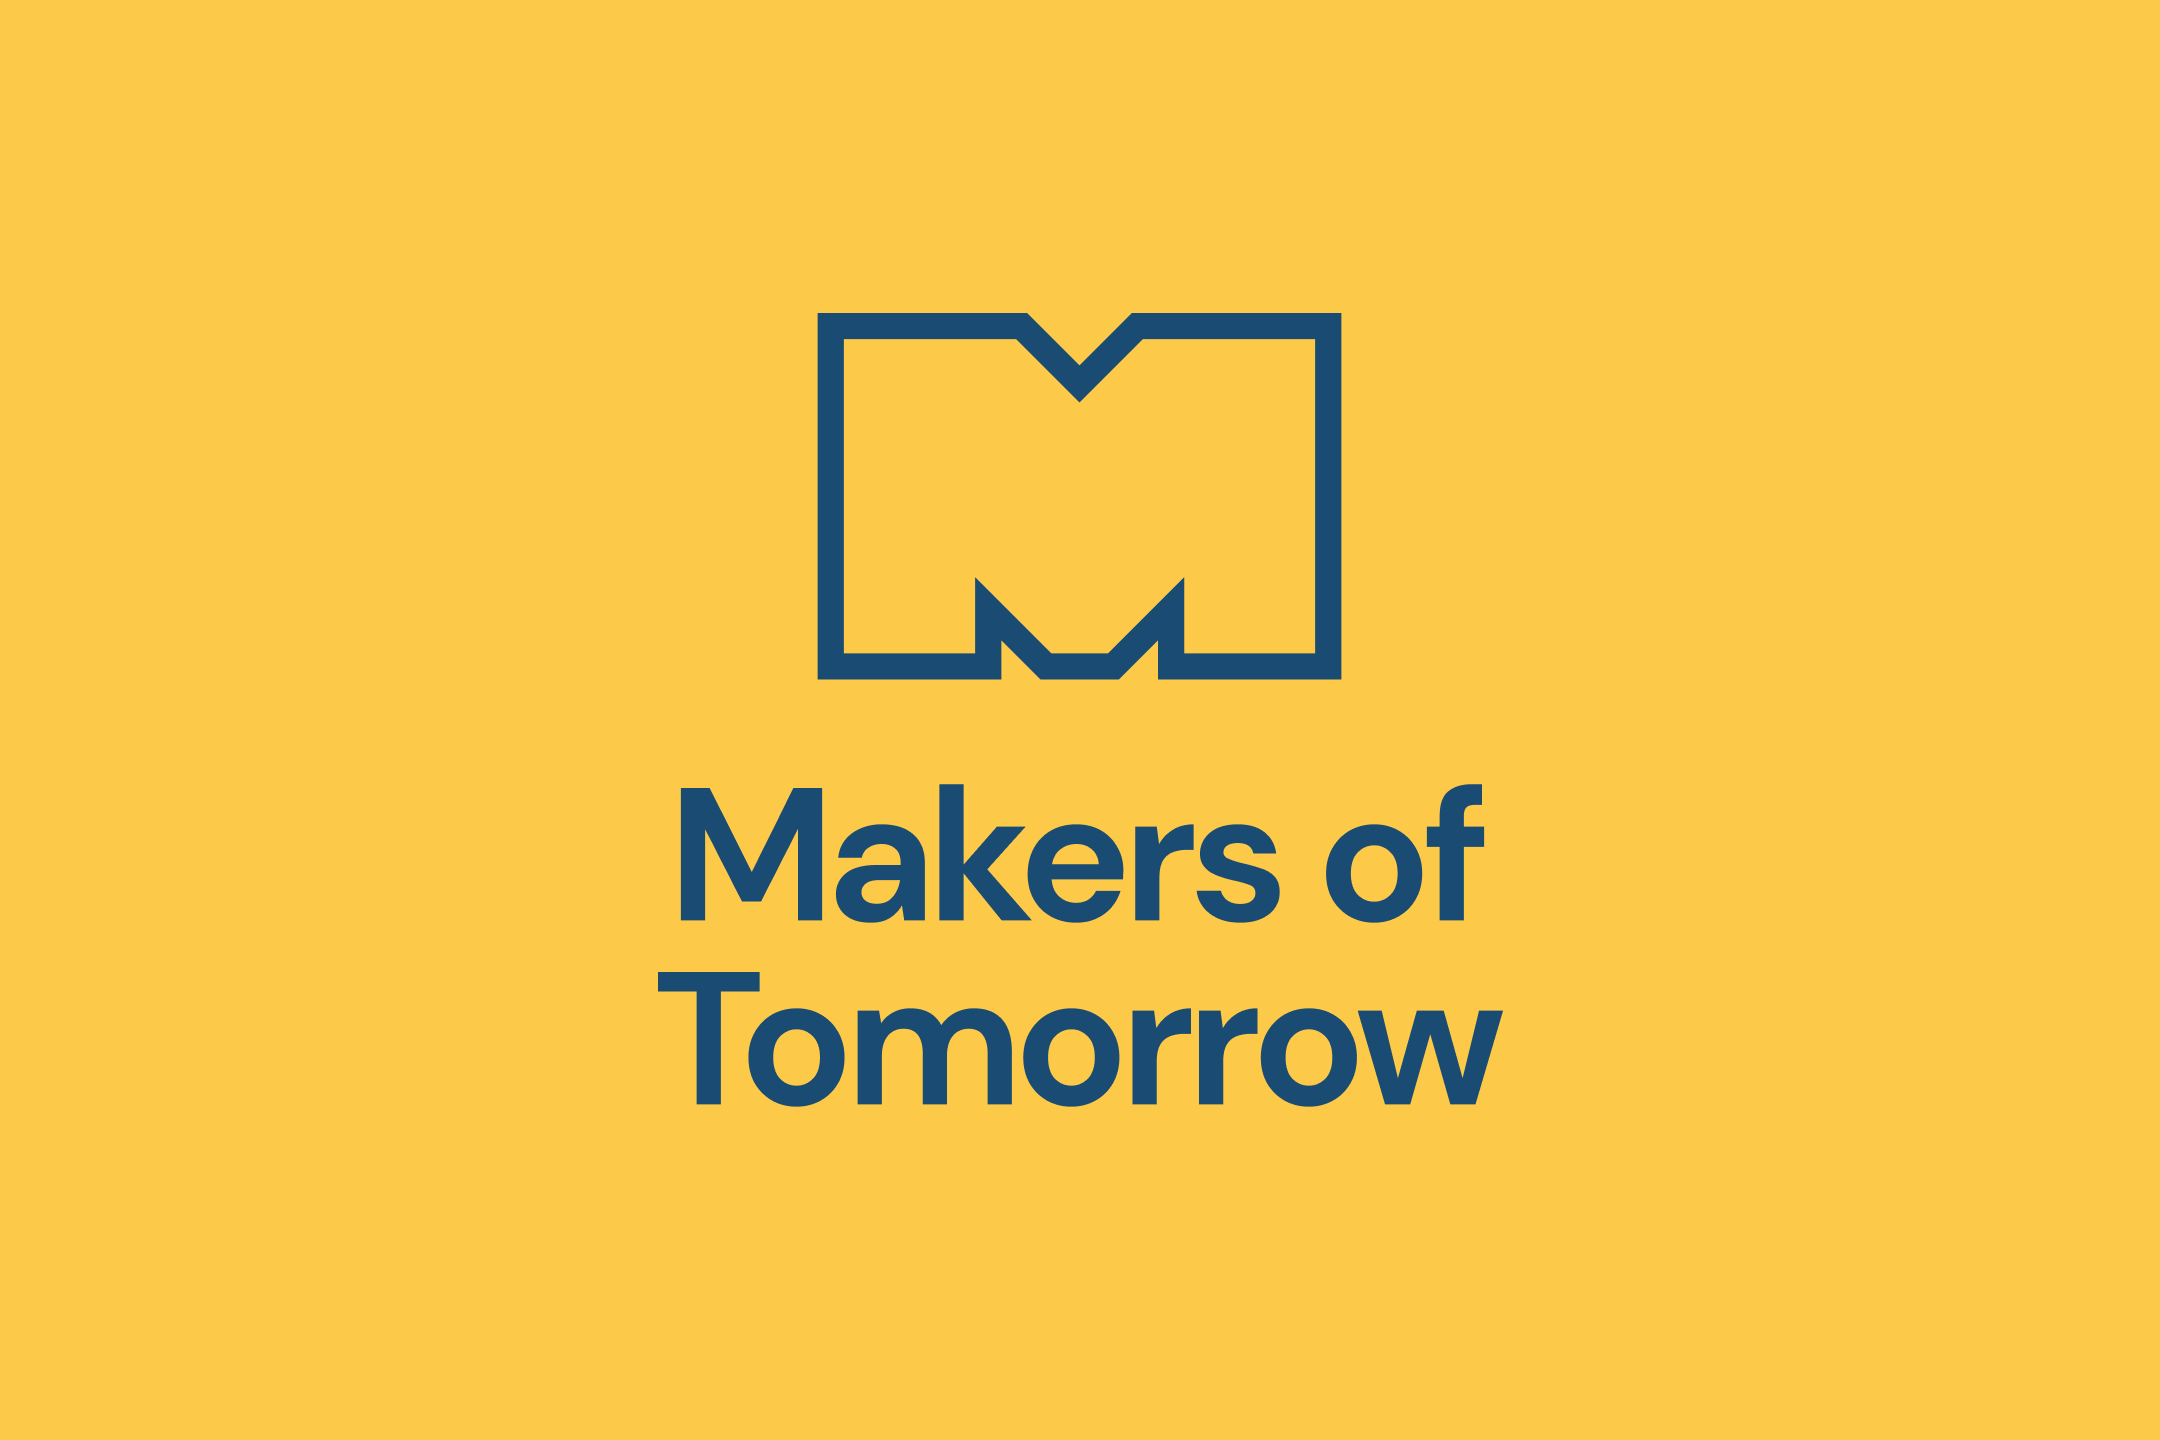 Makers of Tomorrow Logo